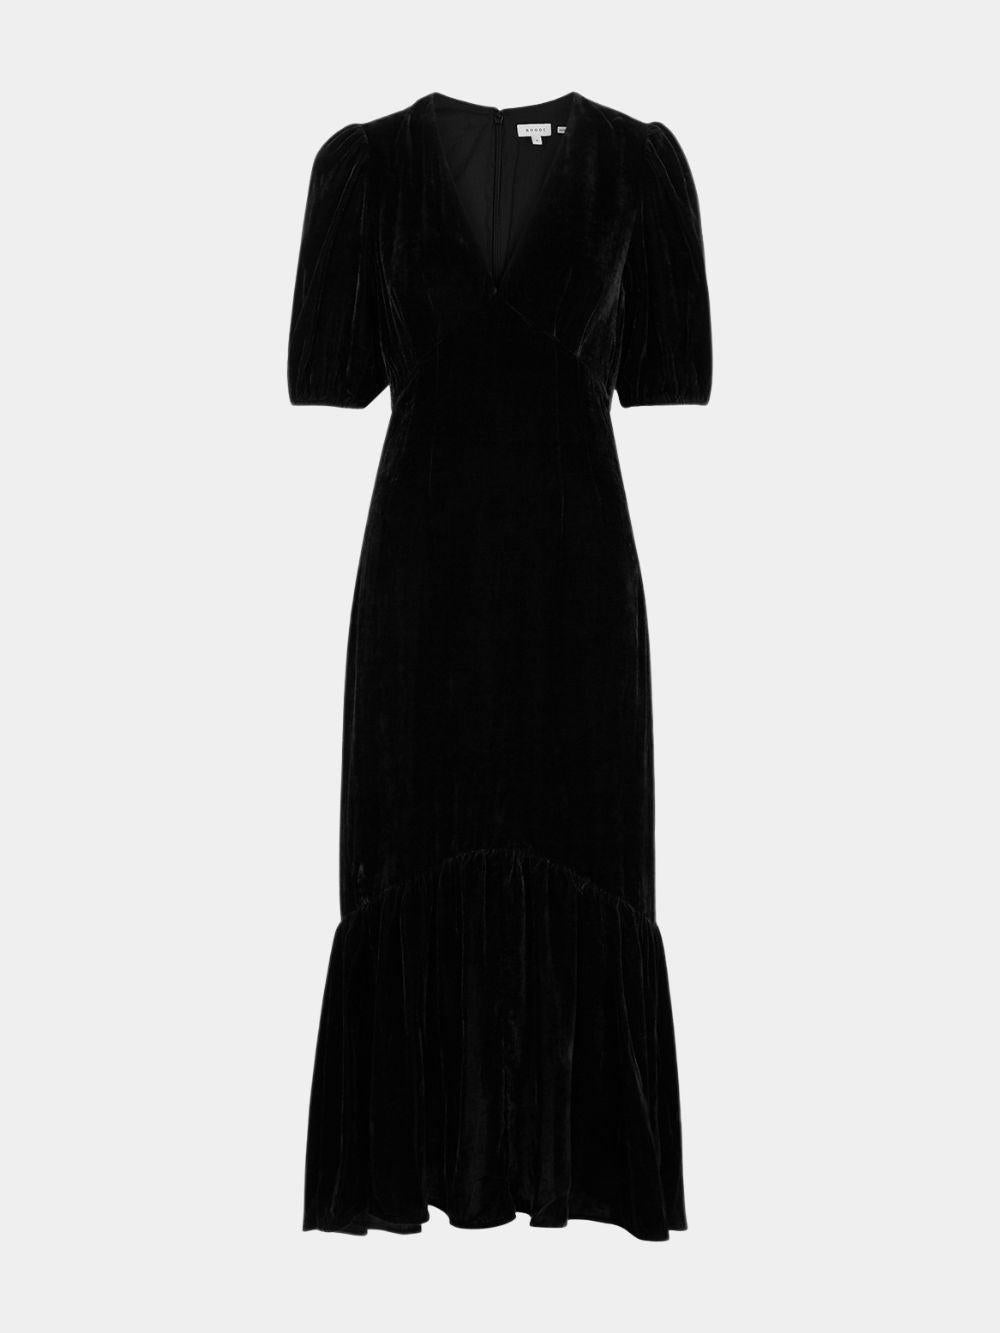 Rhode Ester Dress in Black